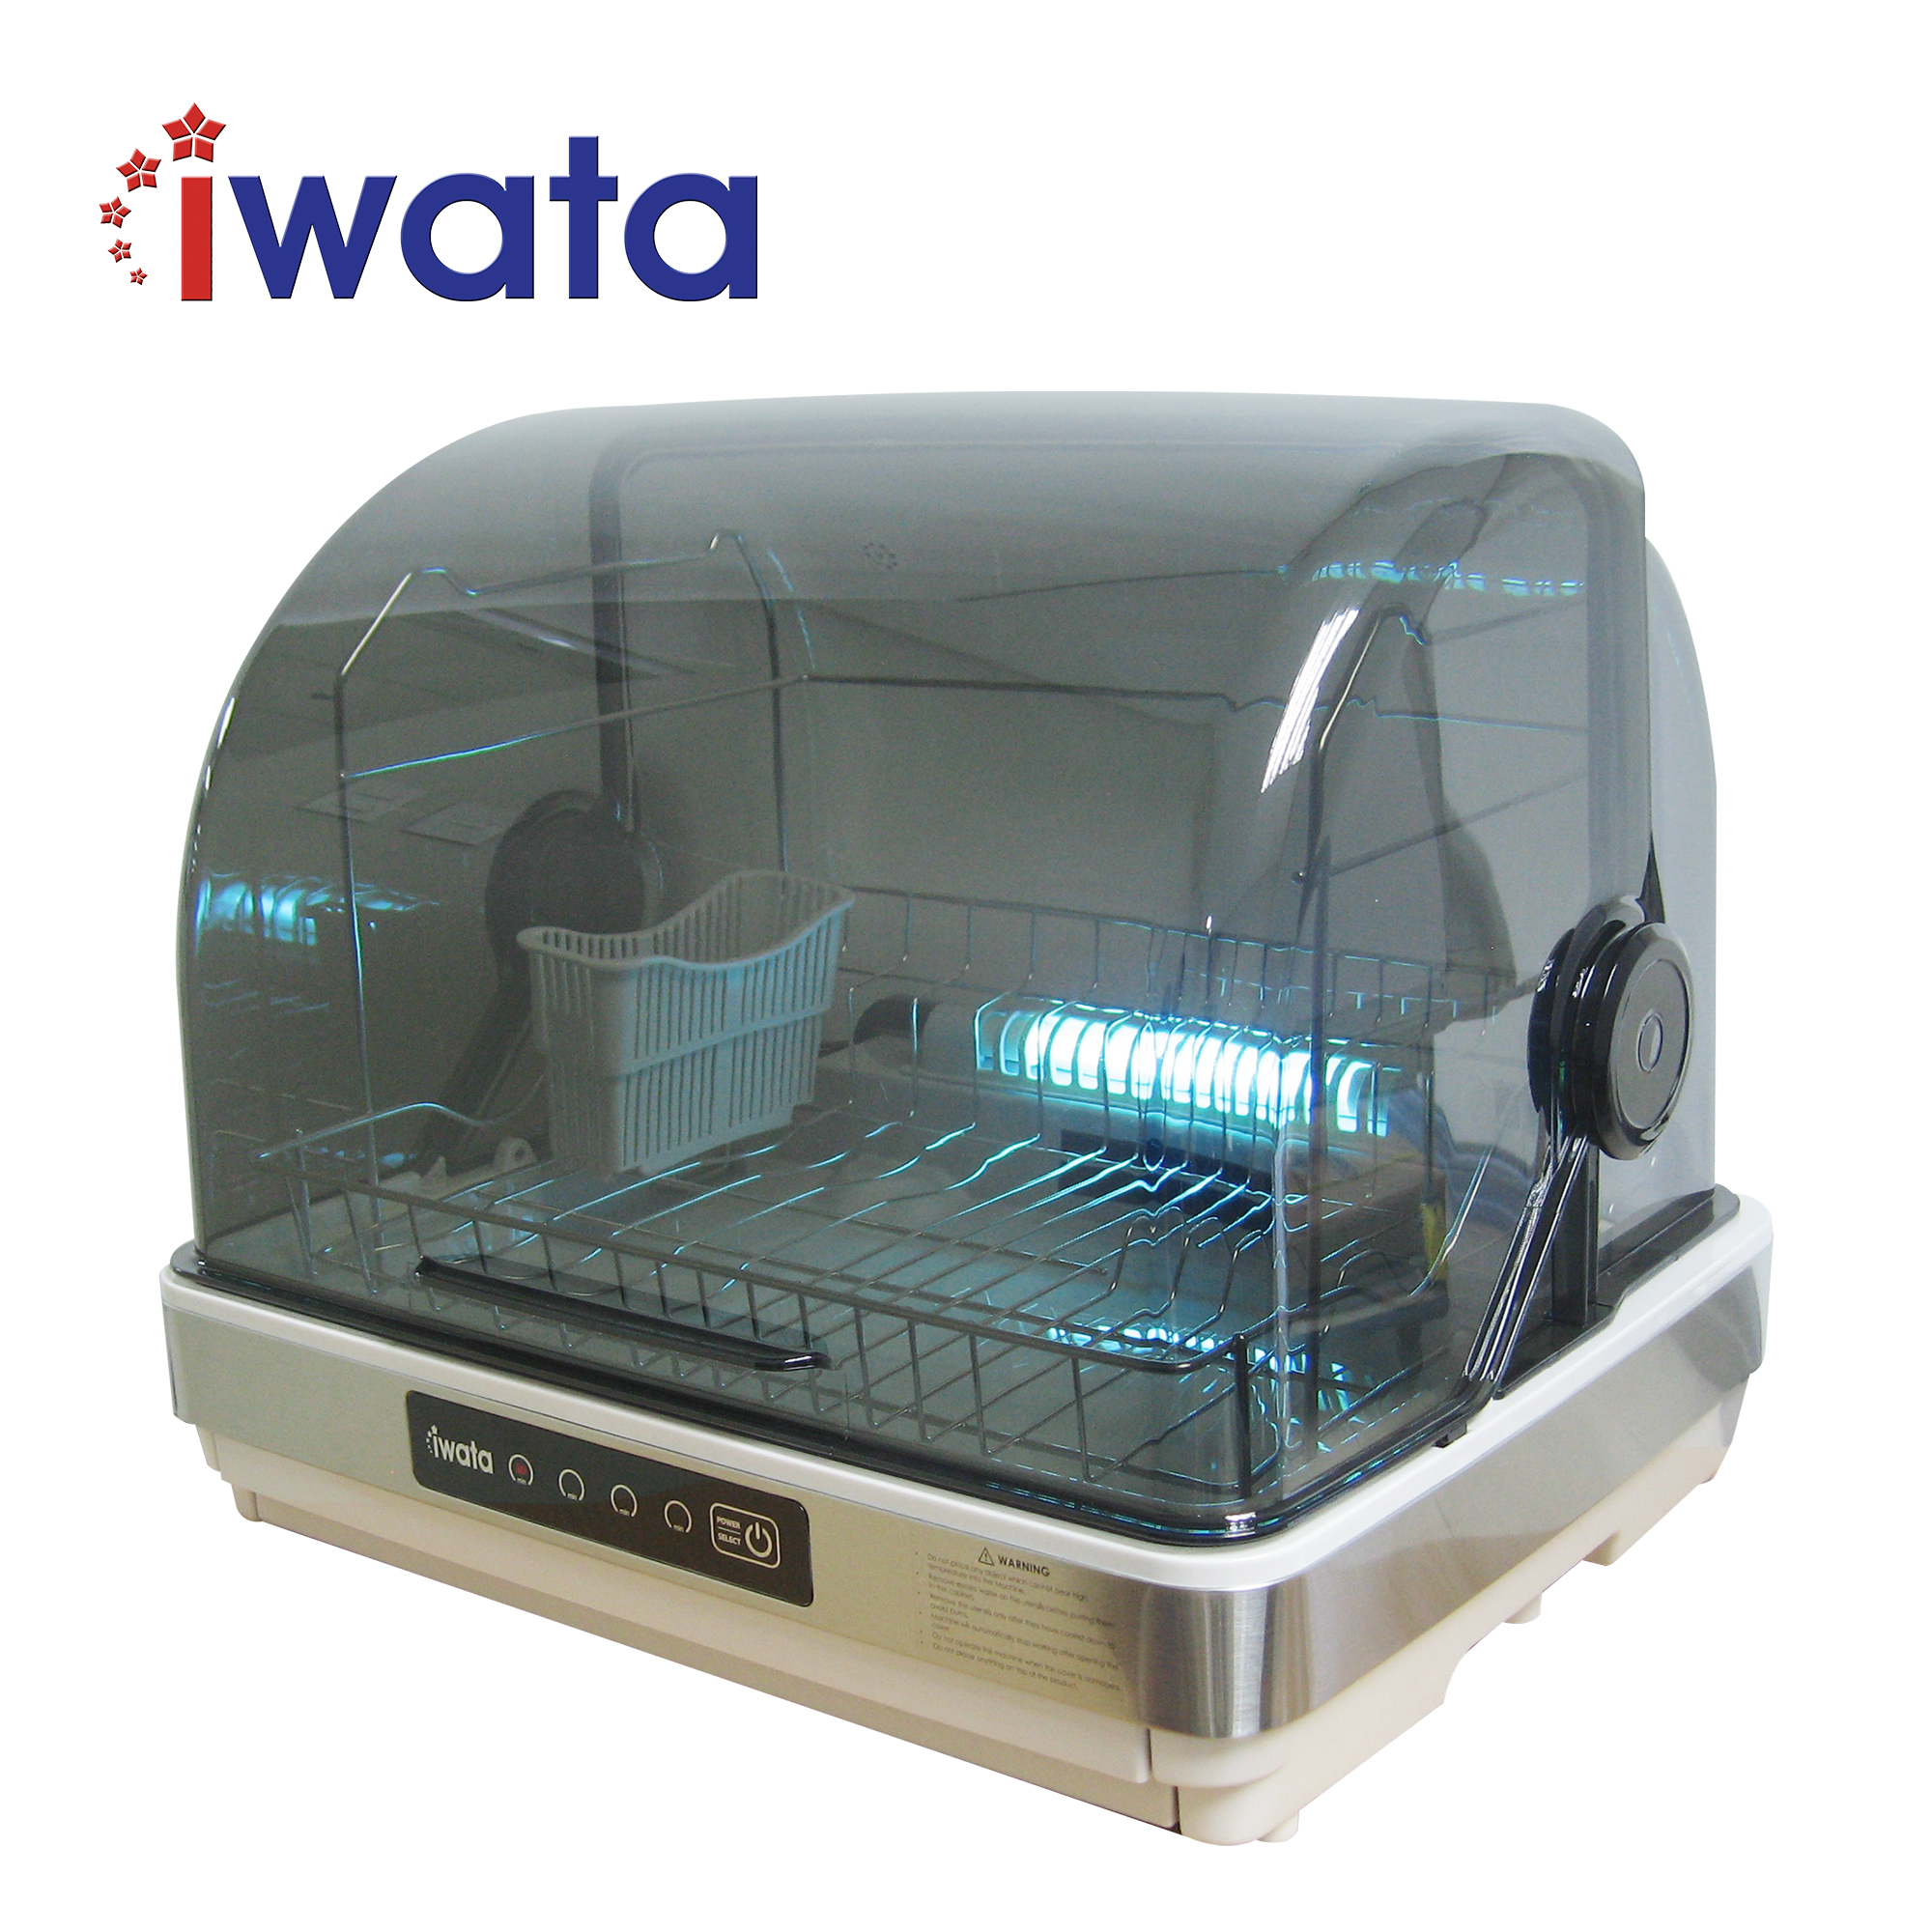 Iwata CM20DDUV-4 Electronic Dish Dryer with UV